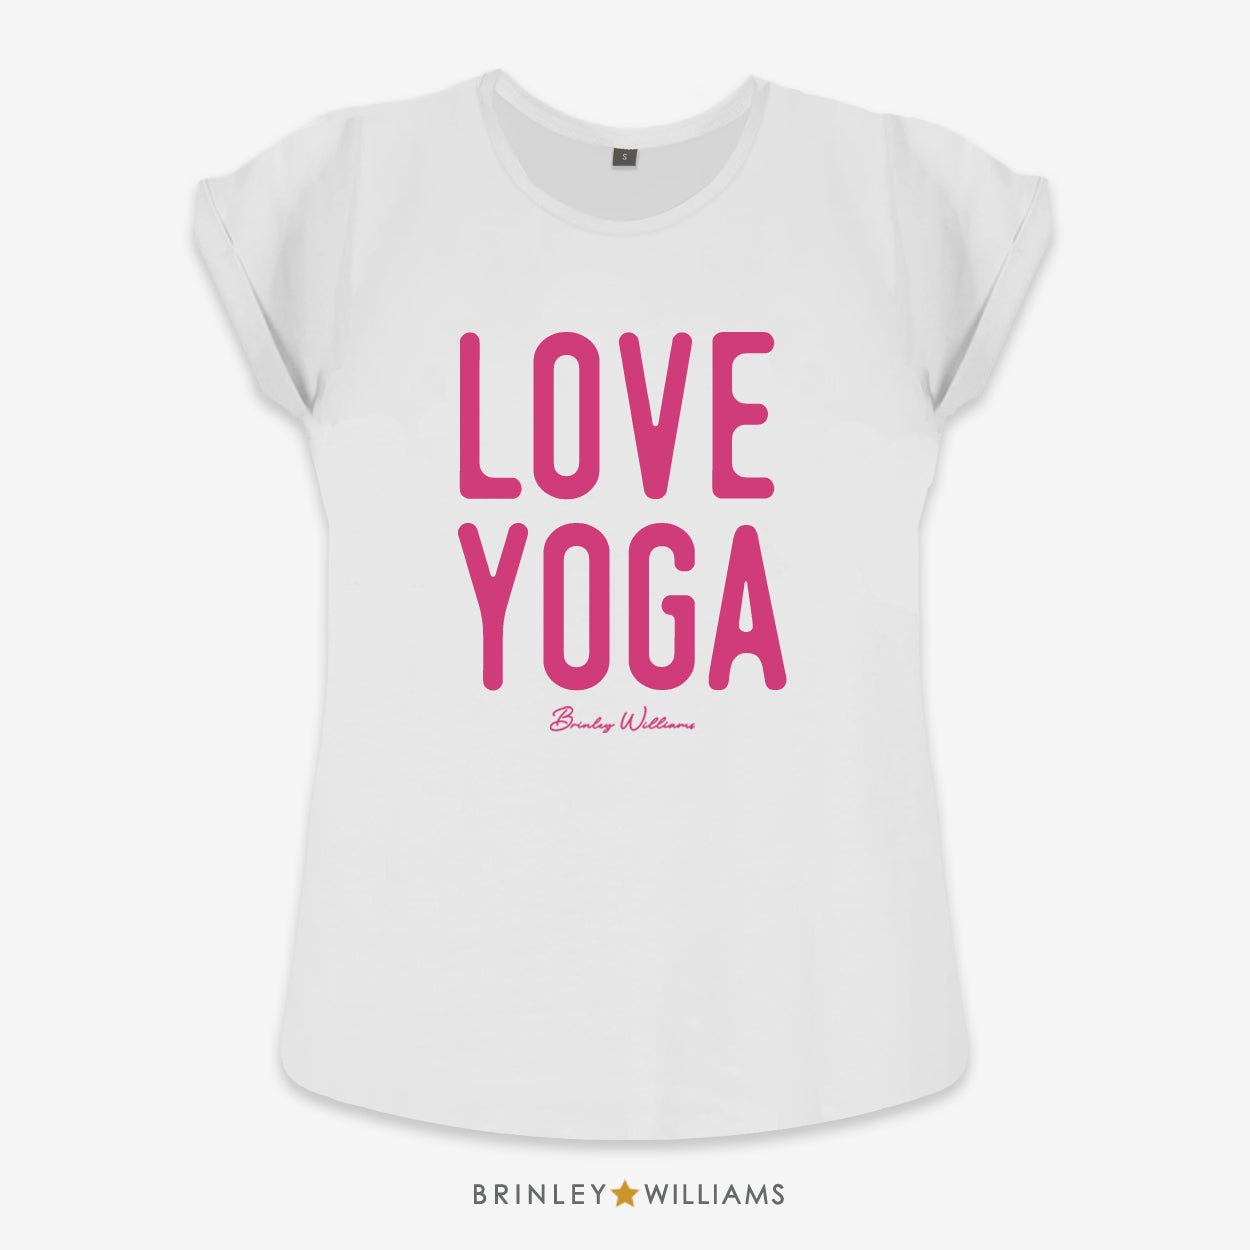 Love Yoga Rolled Sleeve T-shirt - White